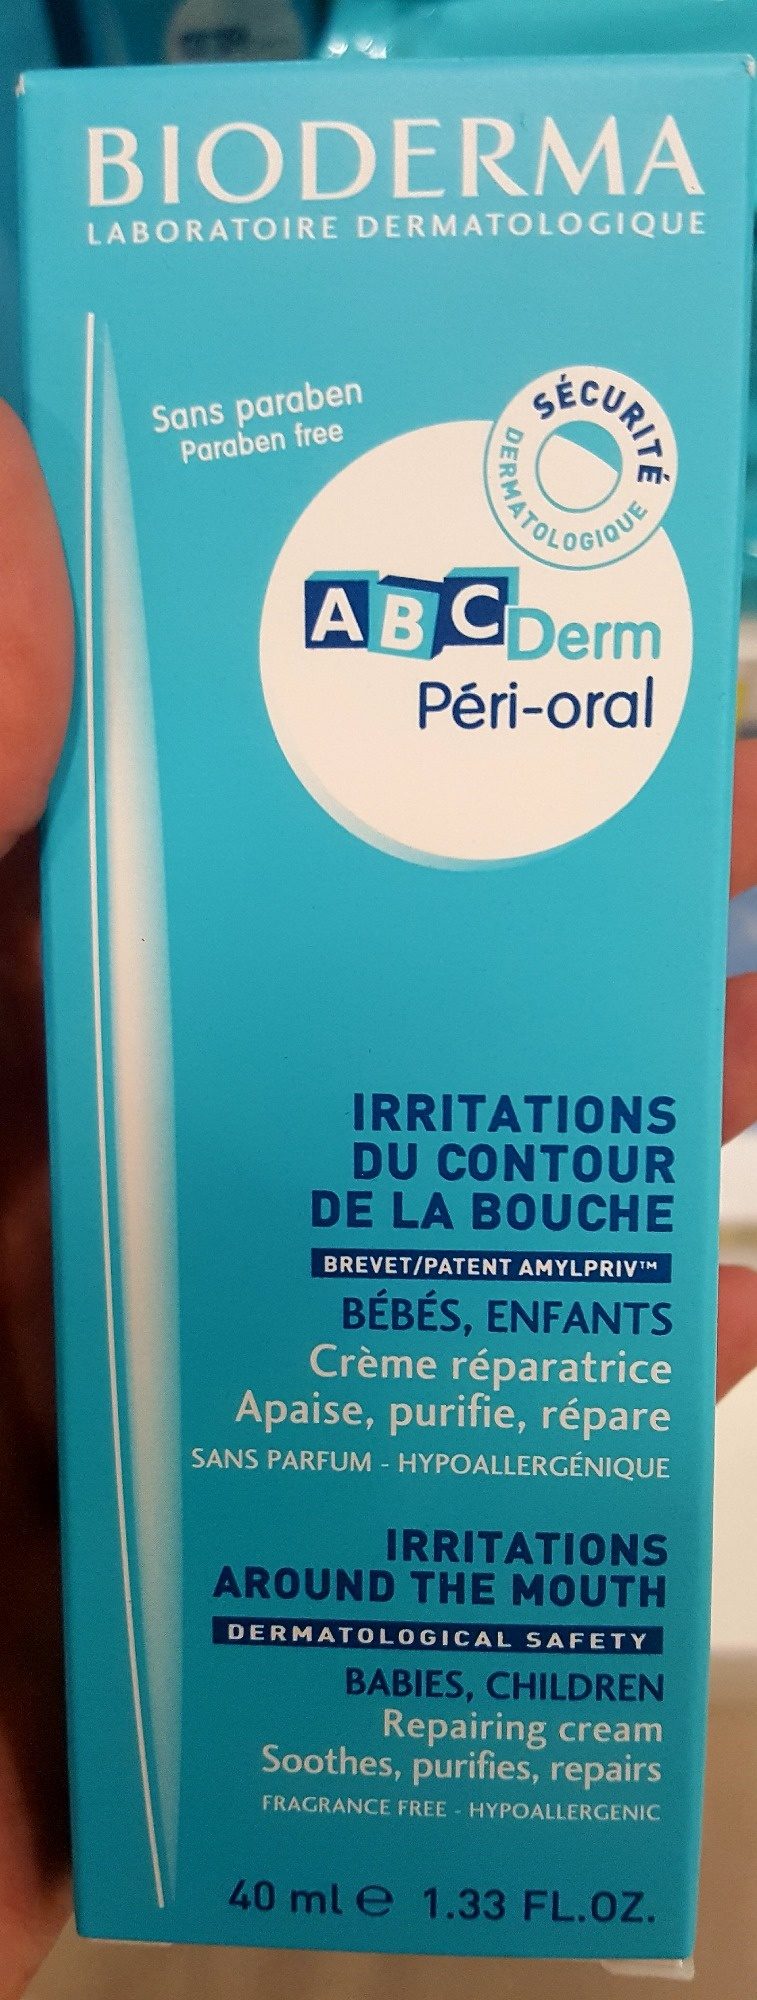 Bioderma Péri-Oral ABCDerm - Product - fr